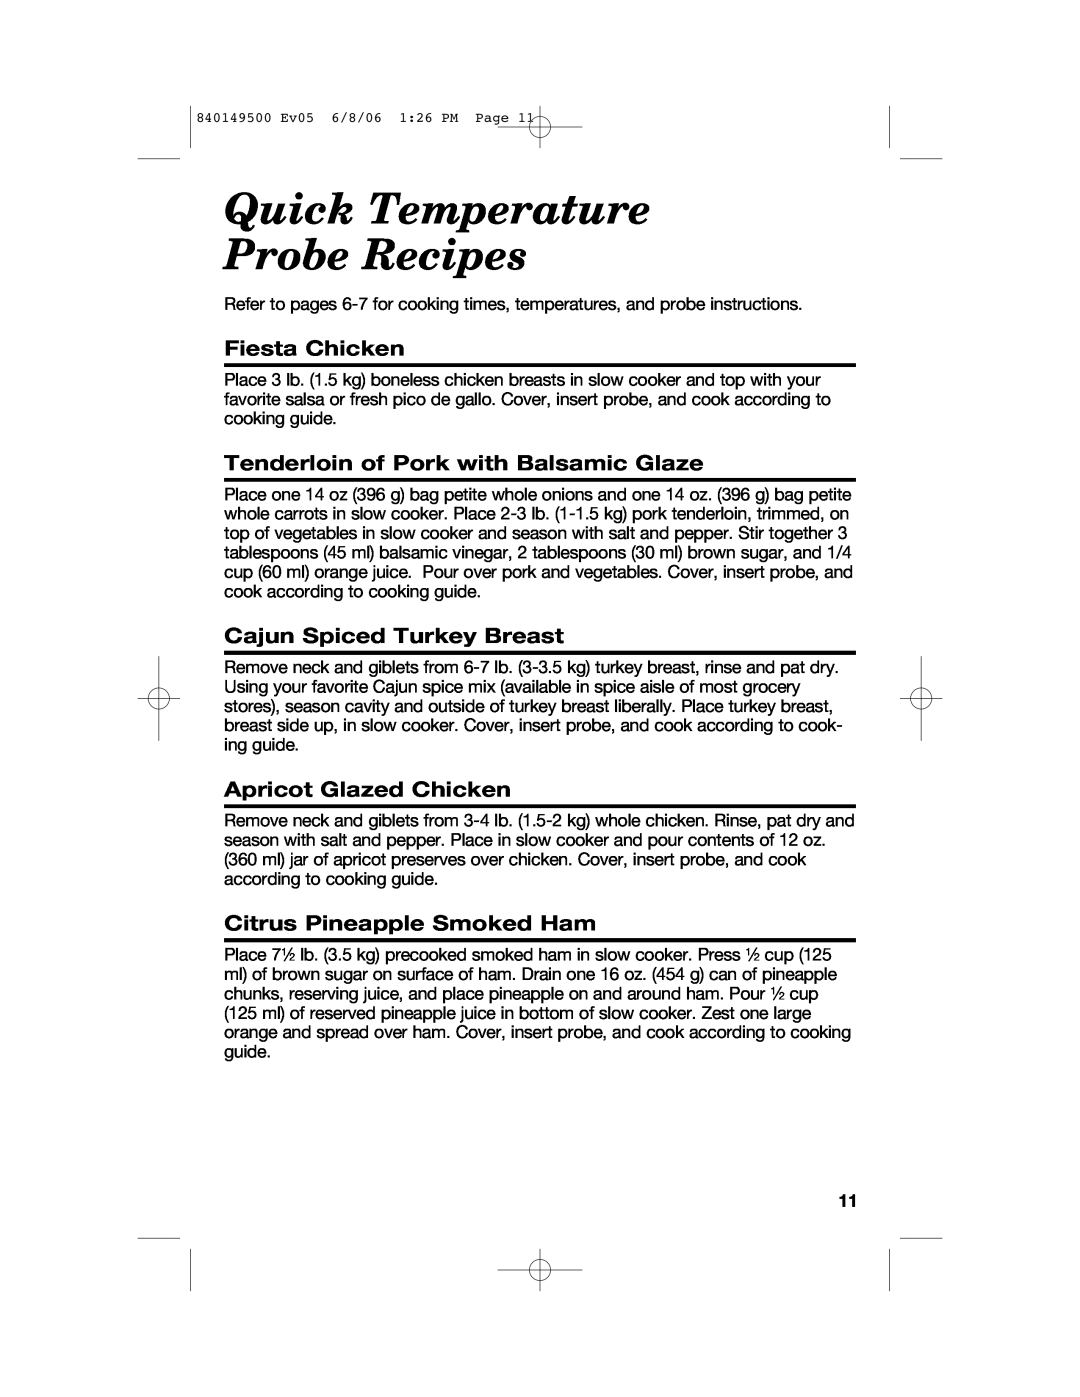 Proctor-Silex 840149500 manual Quick Temperature Probe Recipes, Fiesta Chicken, Tenderloin of Pork with Balsamic Glaze 